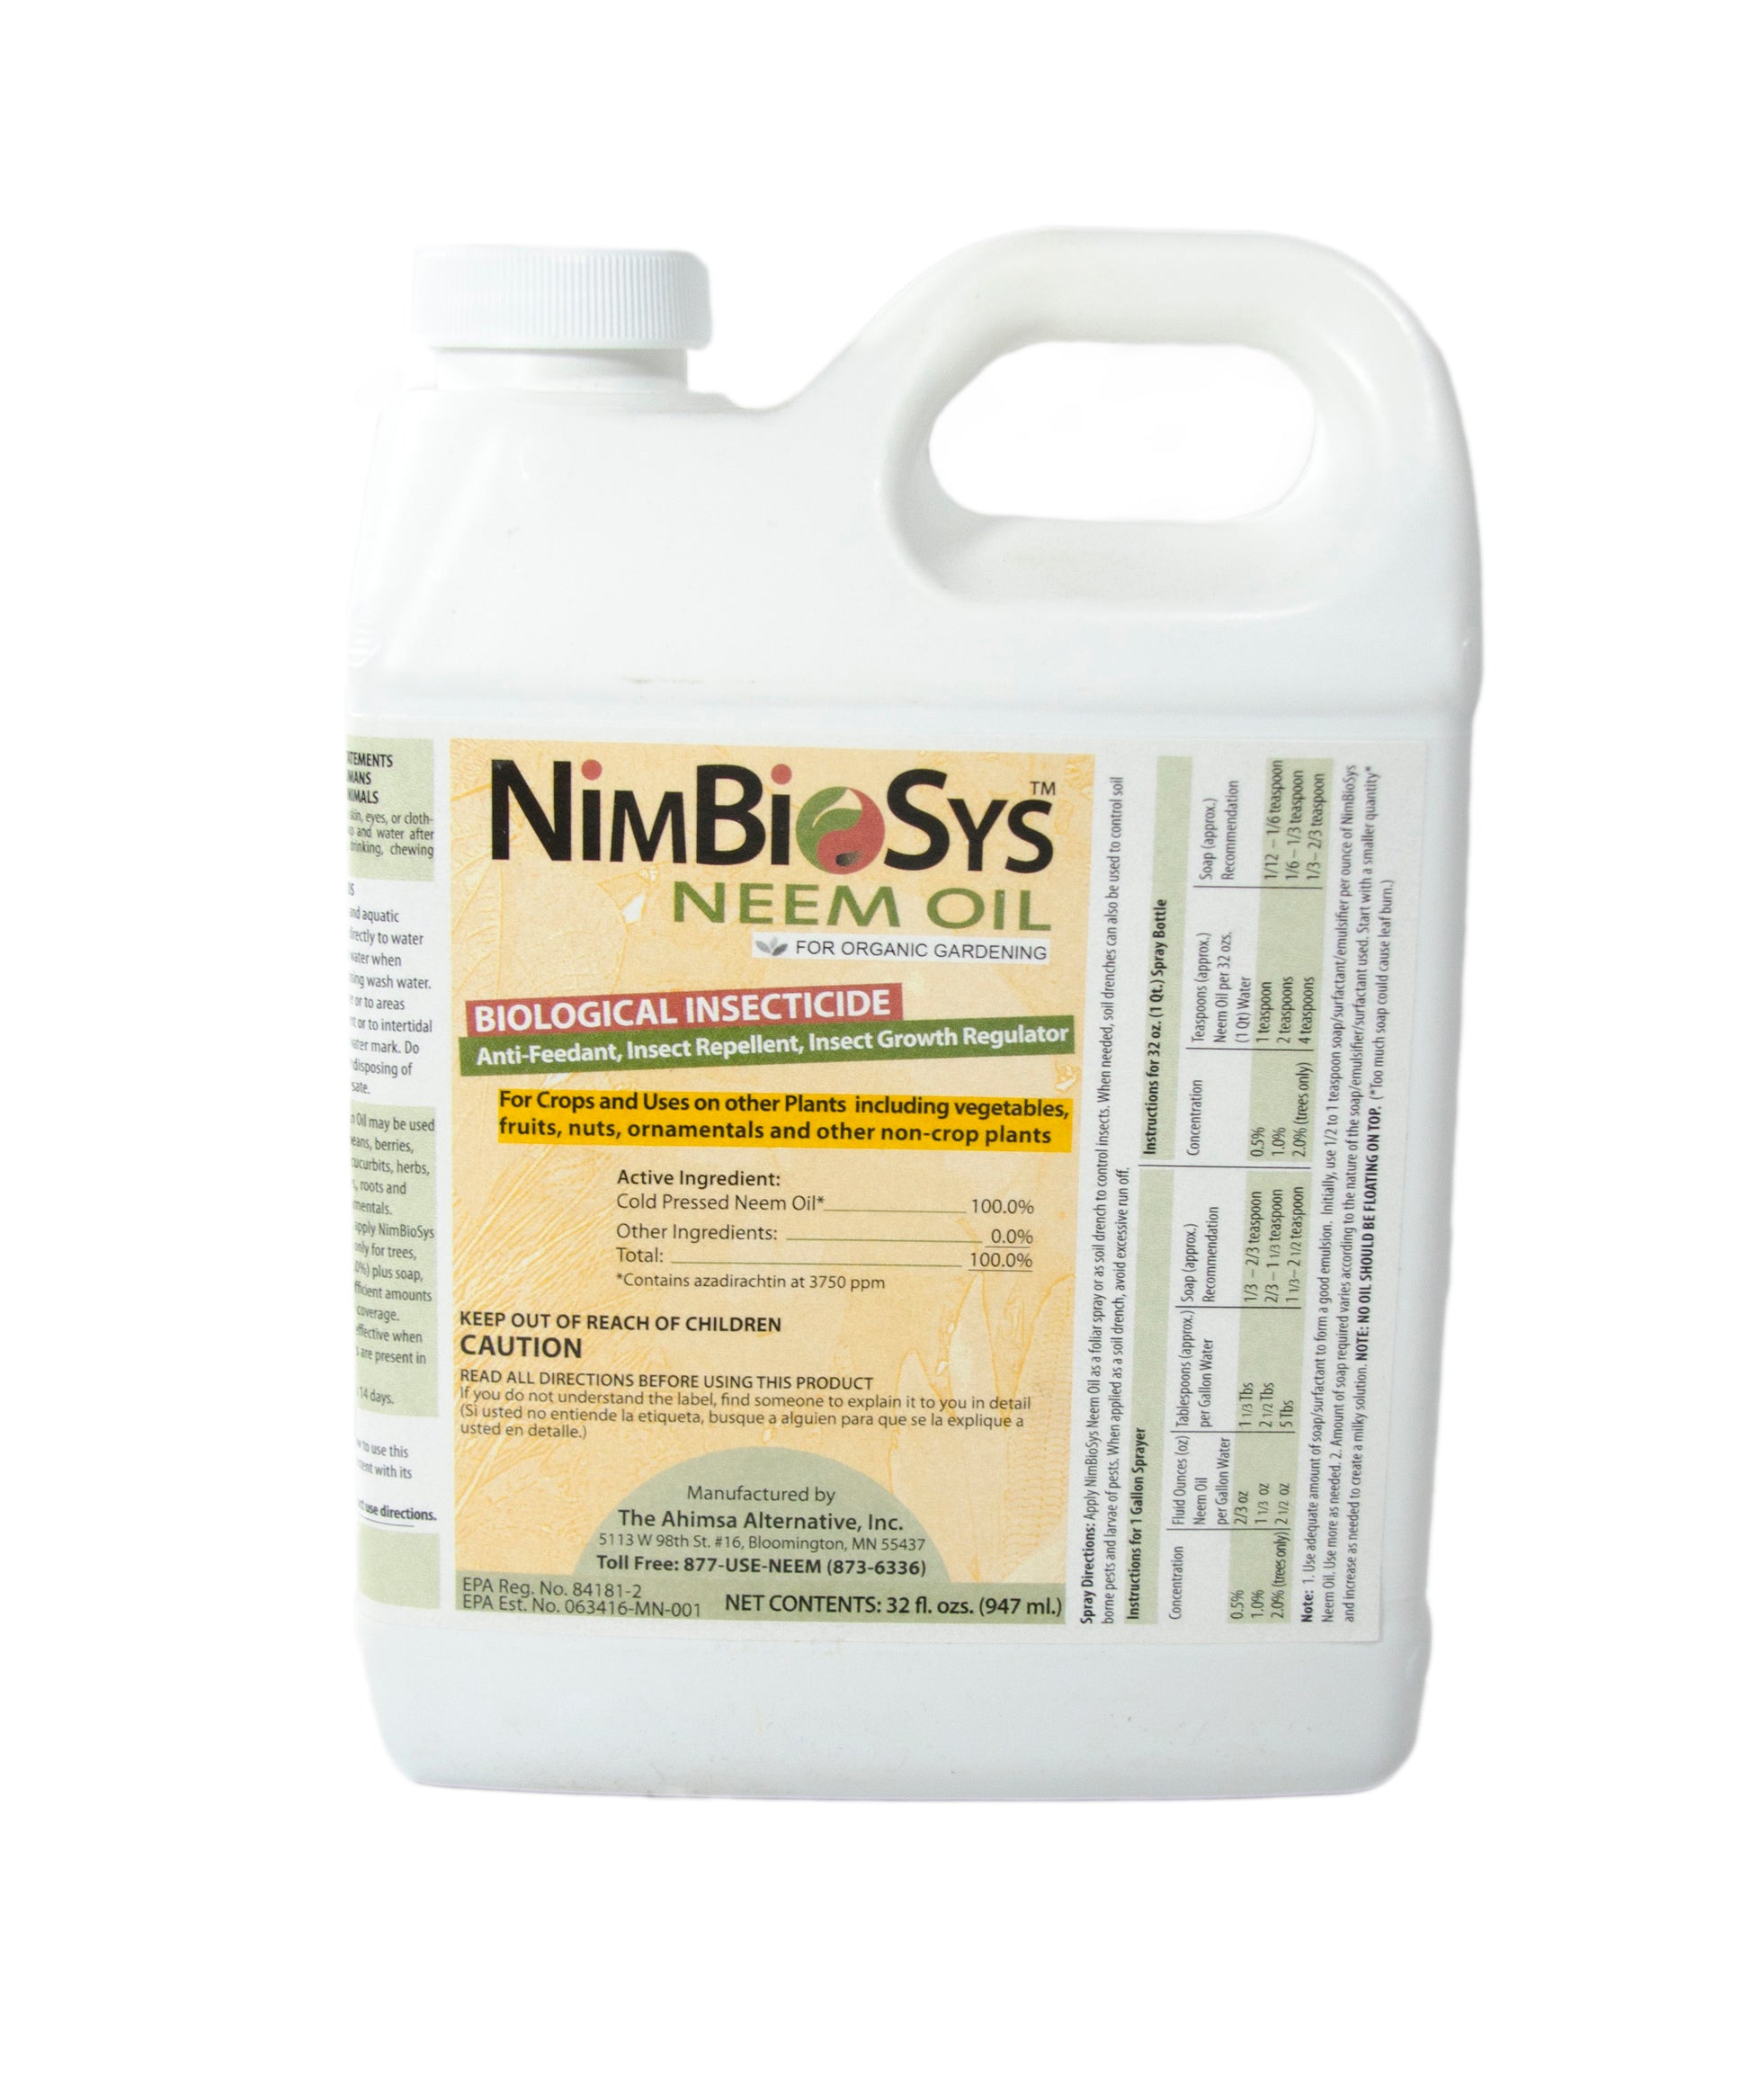 NimBioSyS Neem oil: Biological insecticide